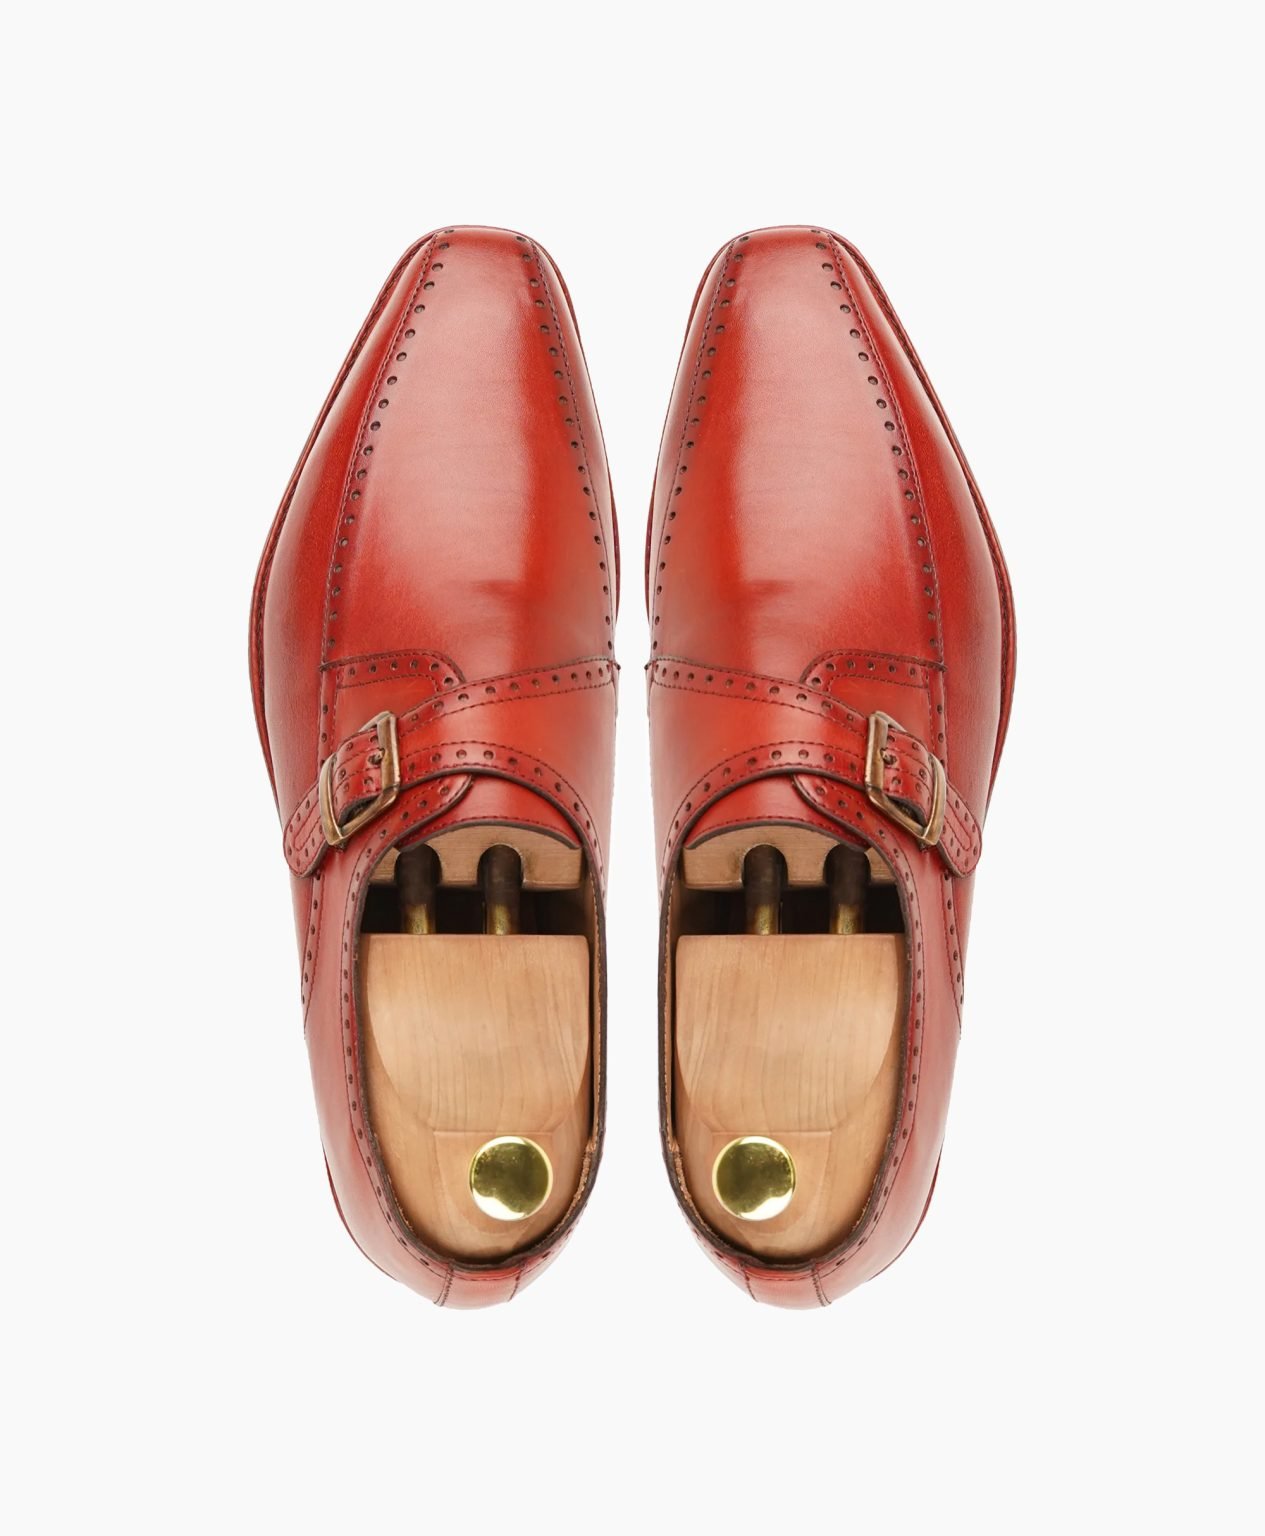 ashburton-single-monkstrap-red-leather-shoes-image202